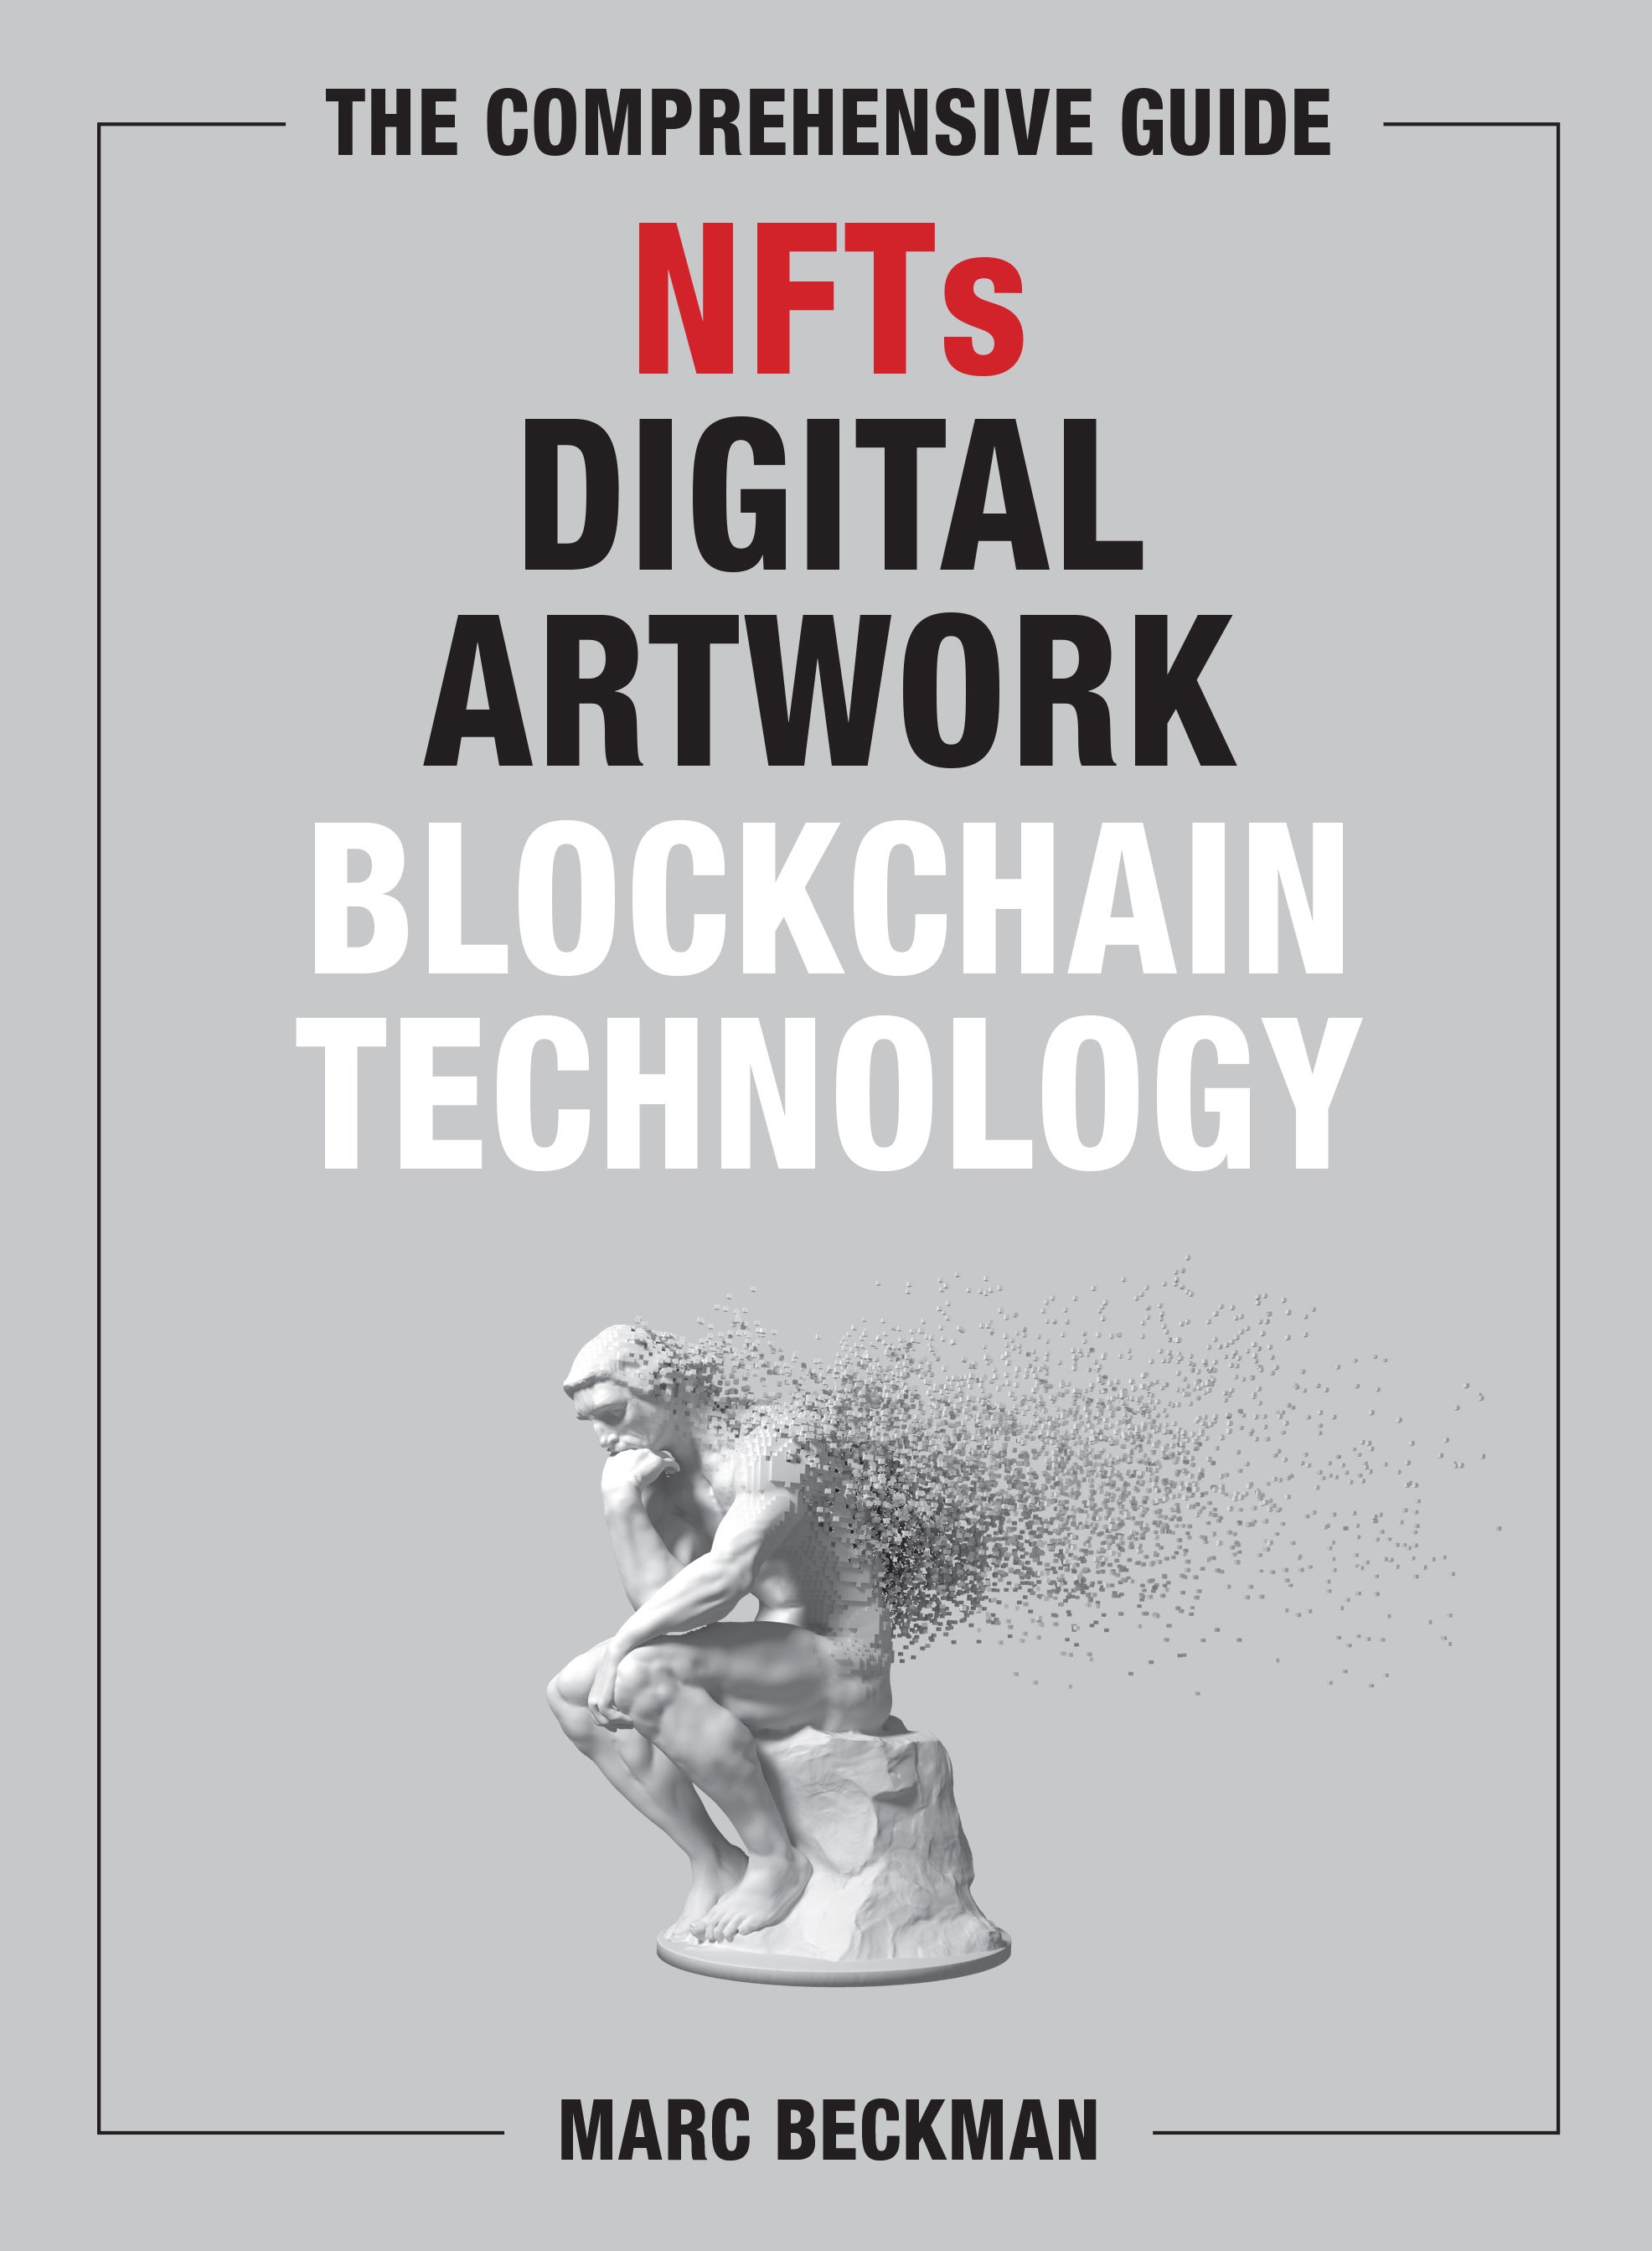 The Comprehensive Guide: NFTs, Digital Artwork, Blockchain Technology